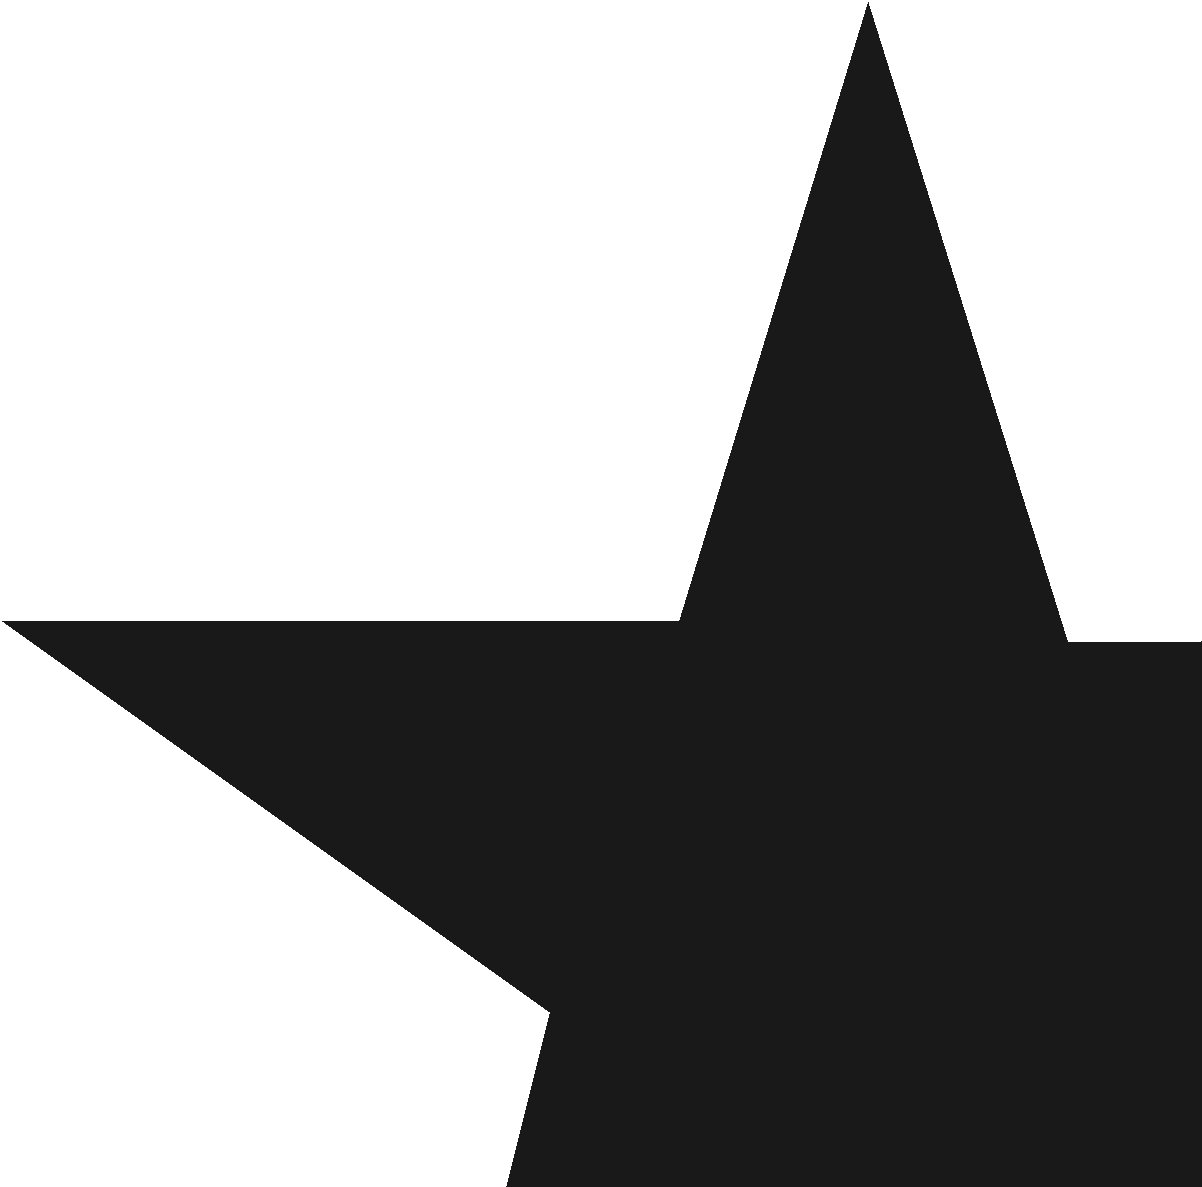 Squarestar star black